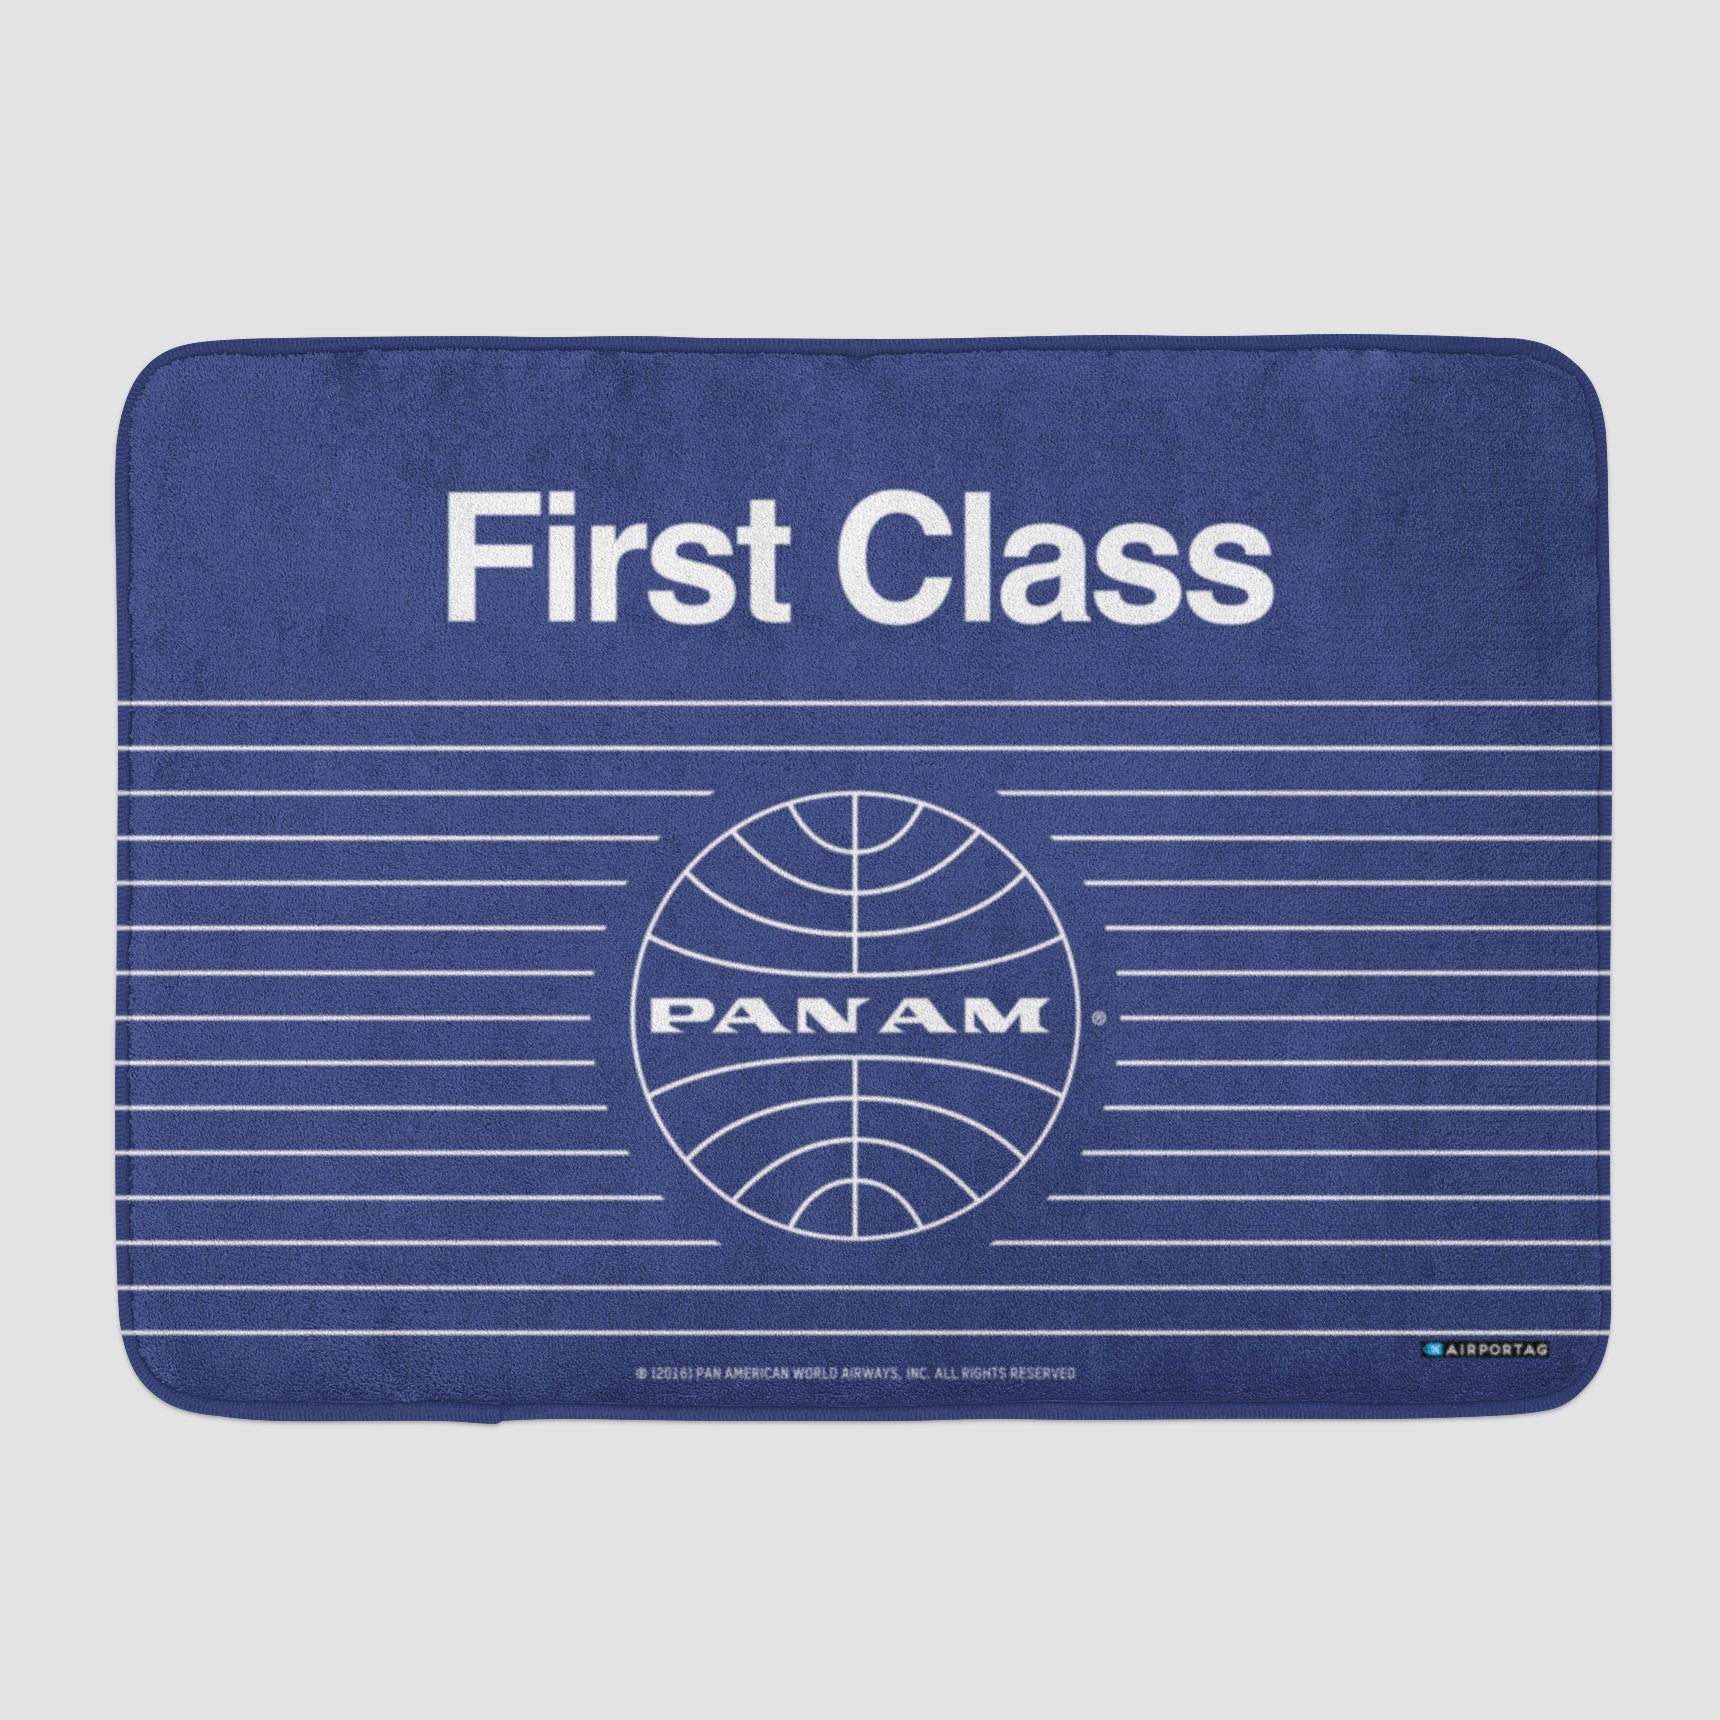 Pan Am First Class - Bath Mat - Airportag